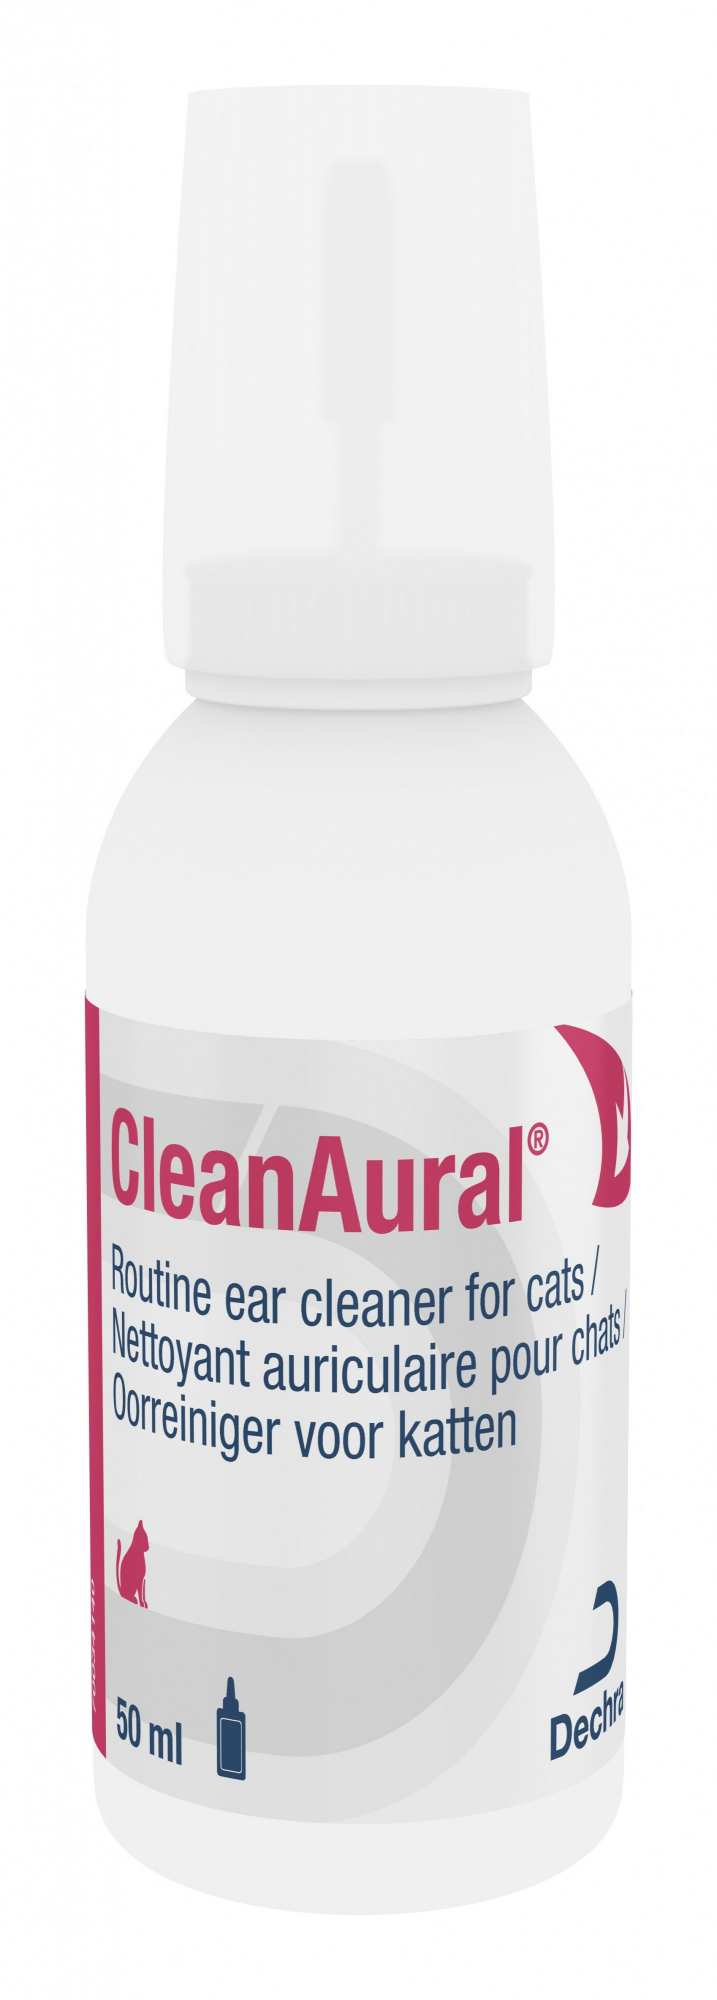 Dechra Cleanaural detergente per le orecchie dei gatti